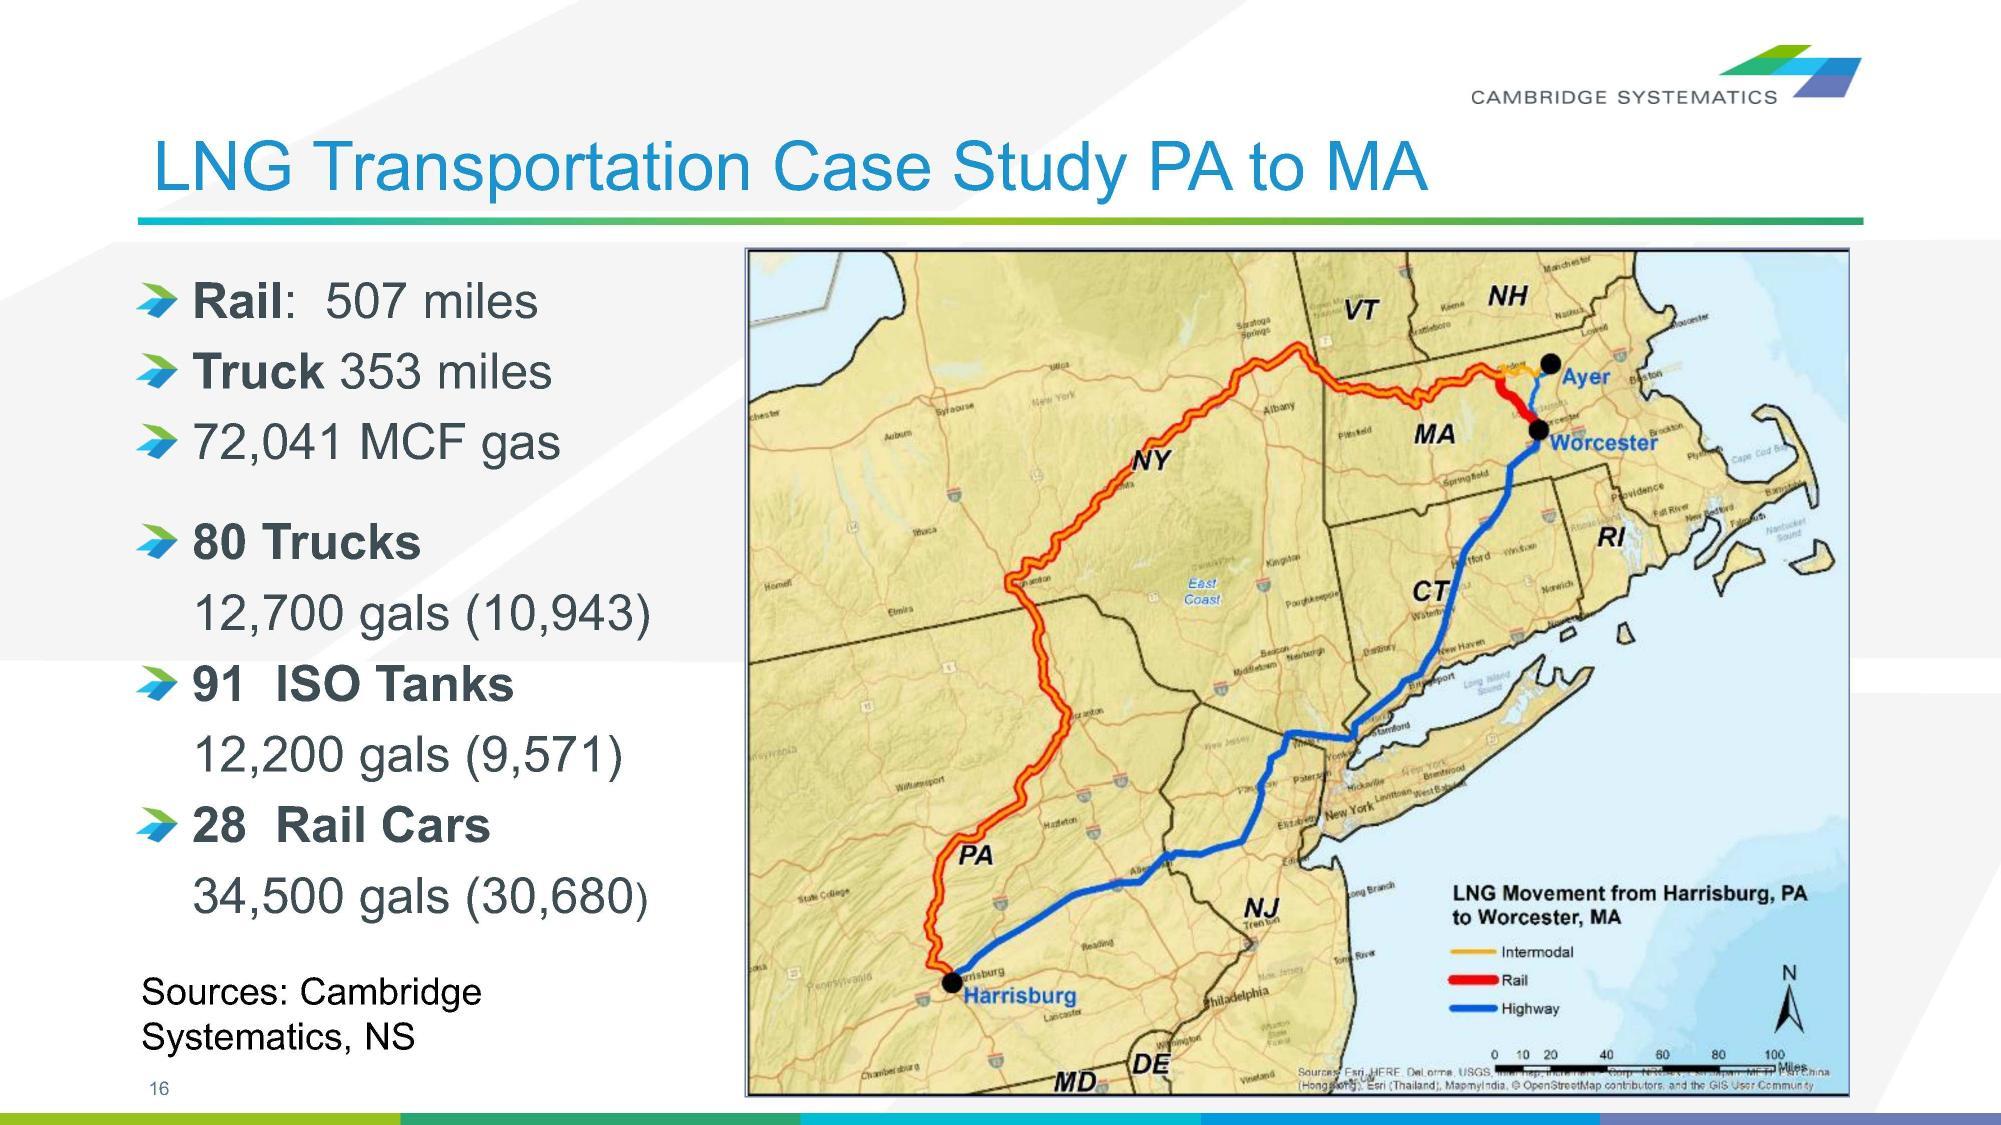 LNG Transportation Case 2 Study PA to MA